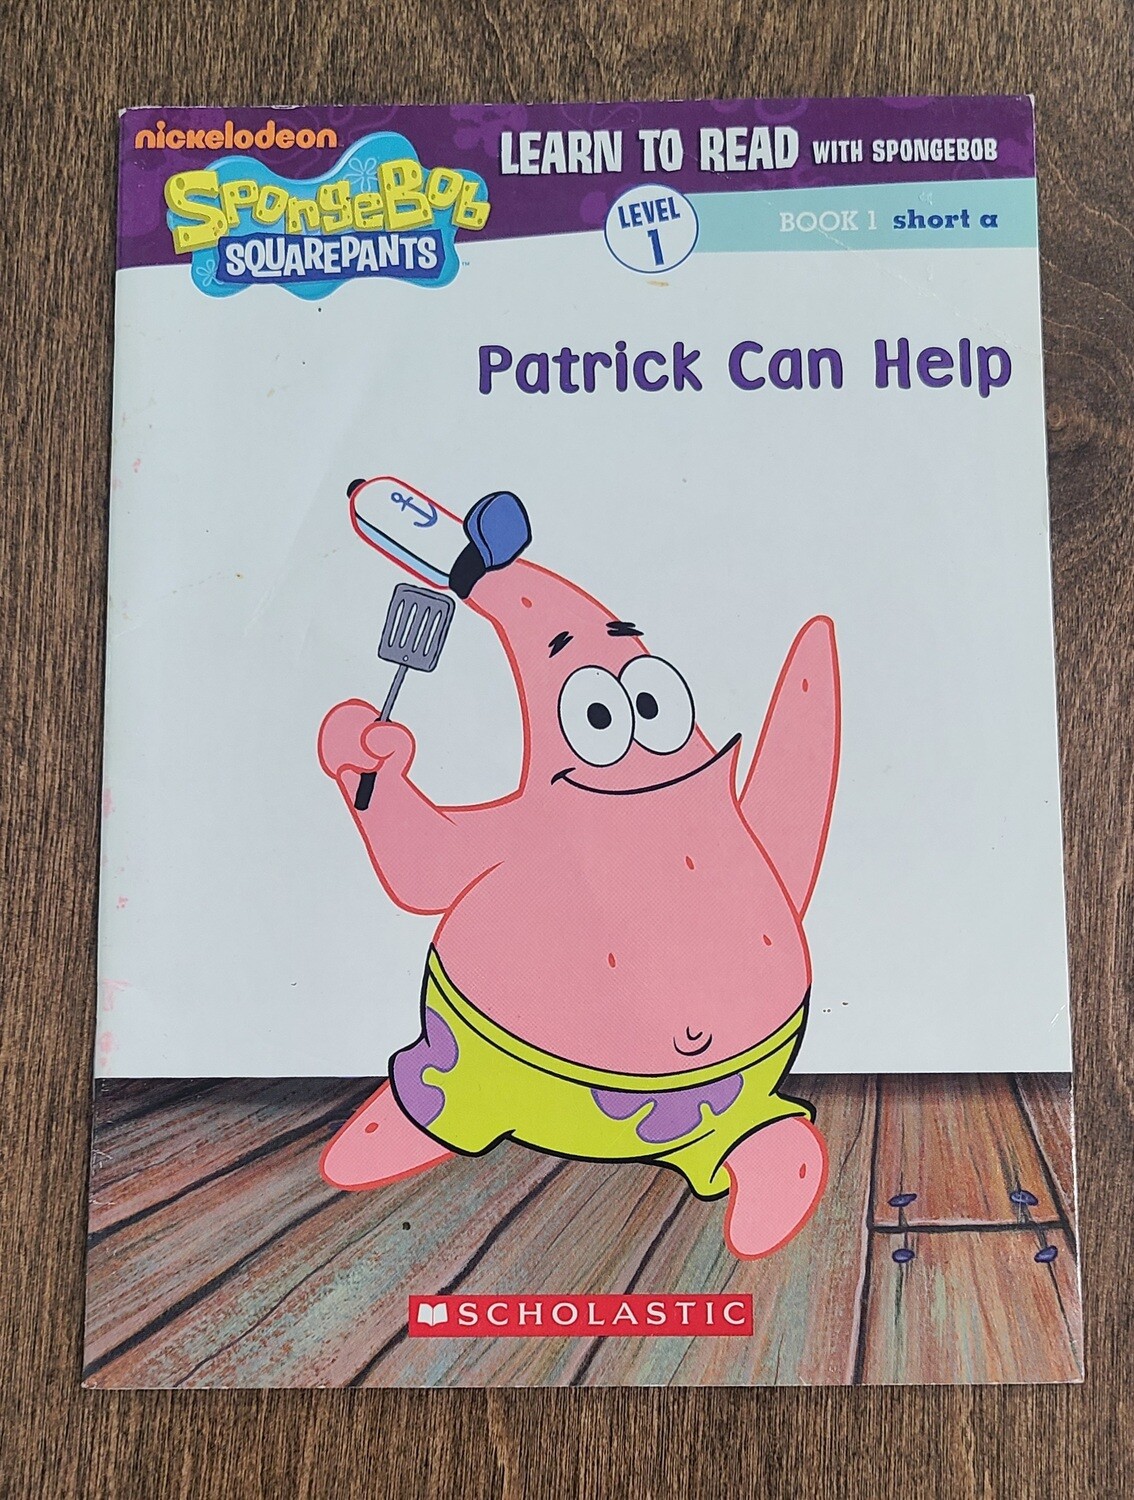 Spongebob Squarepants: Patrick Can Help by Quinlan Lee